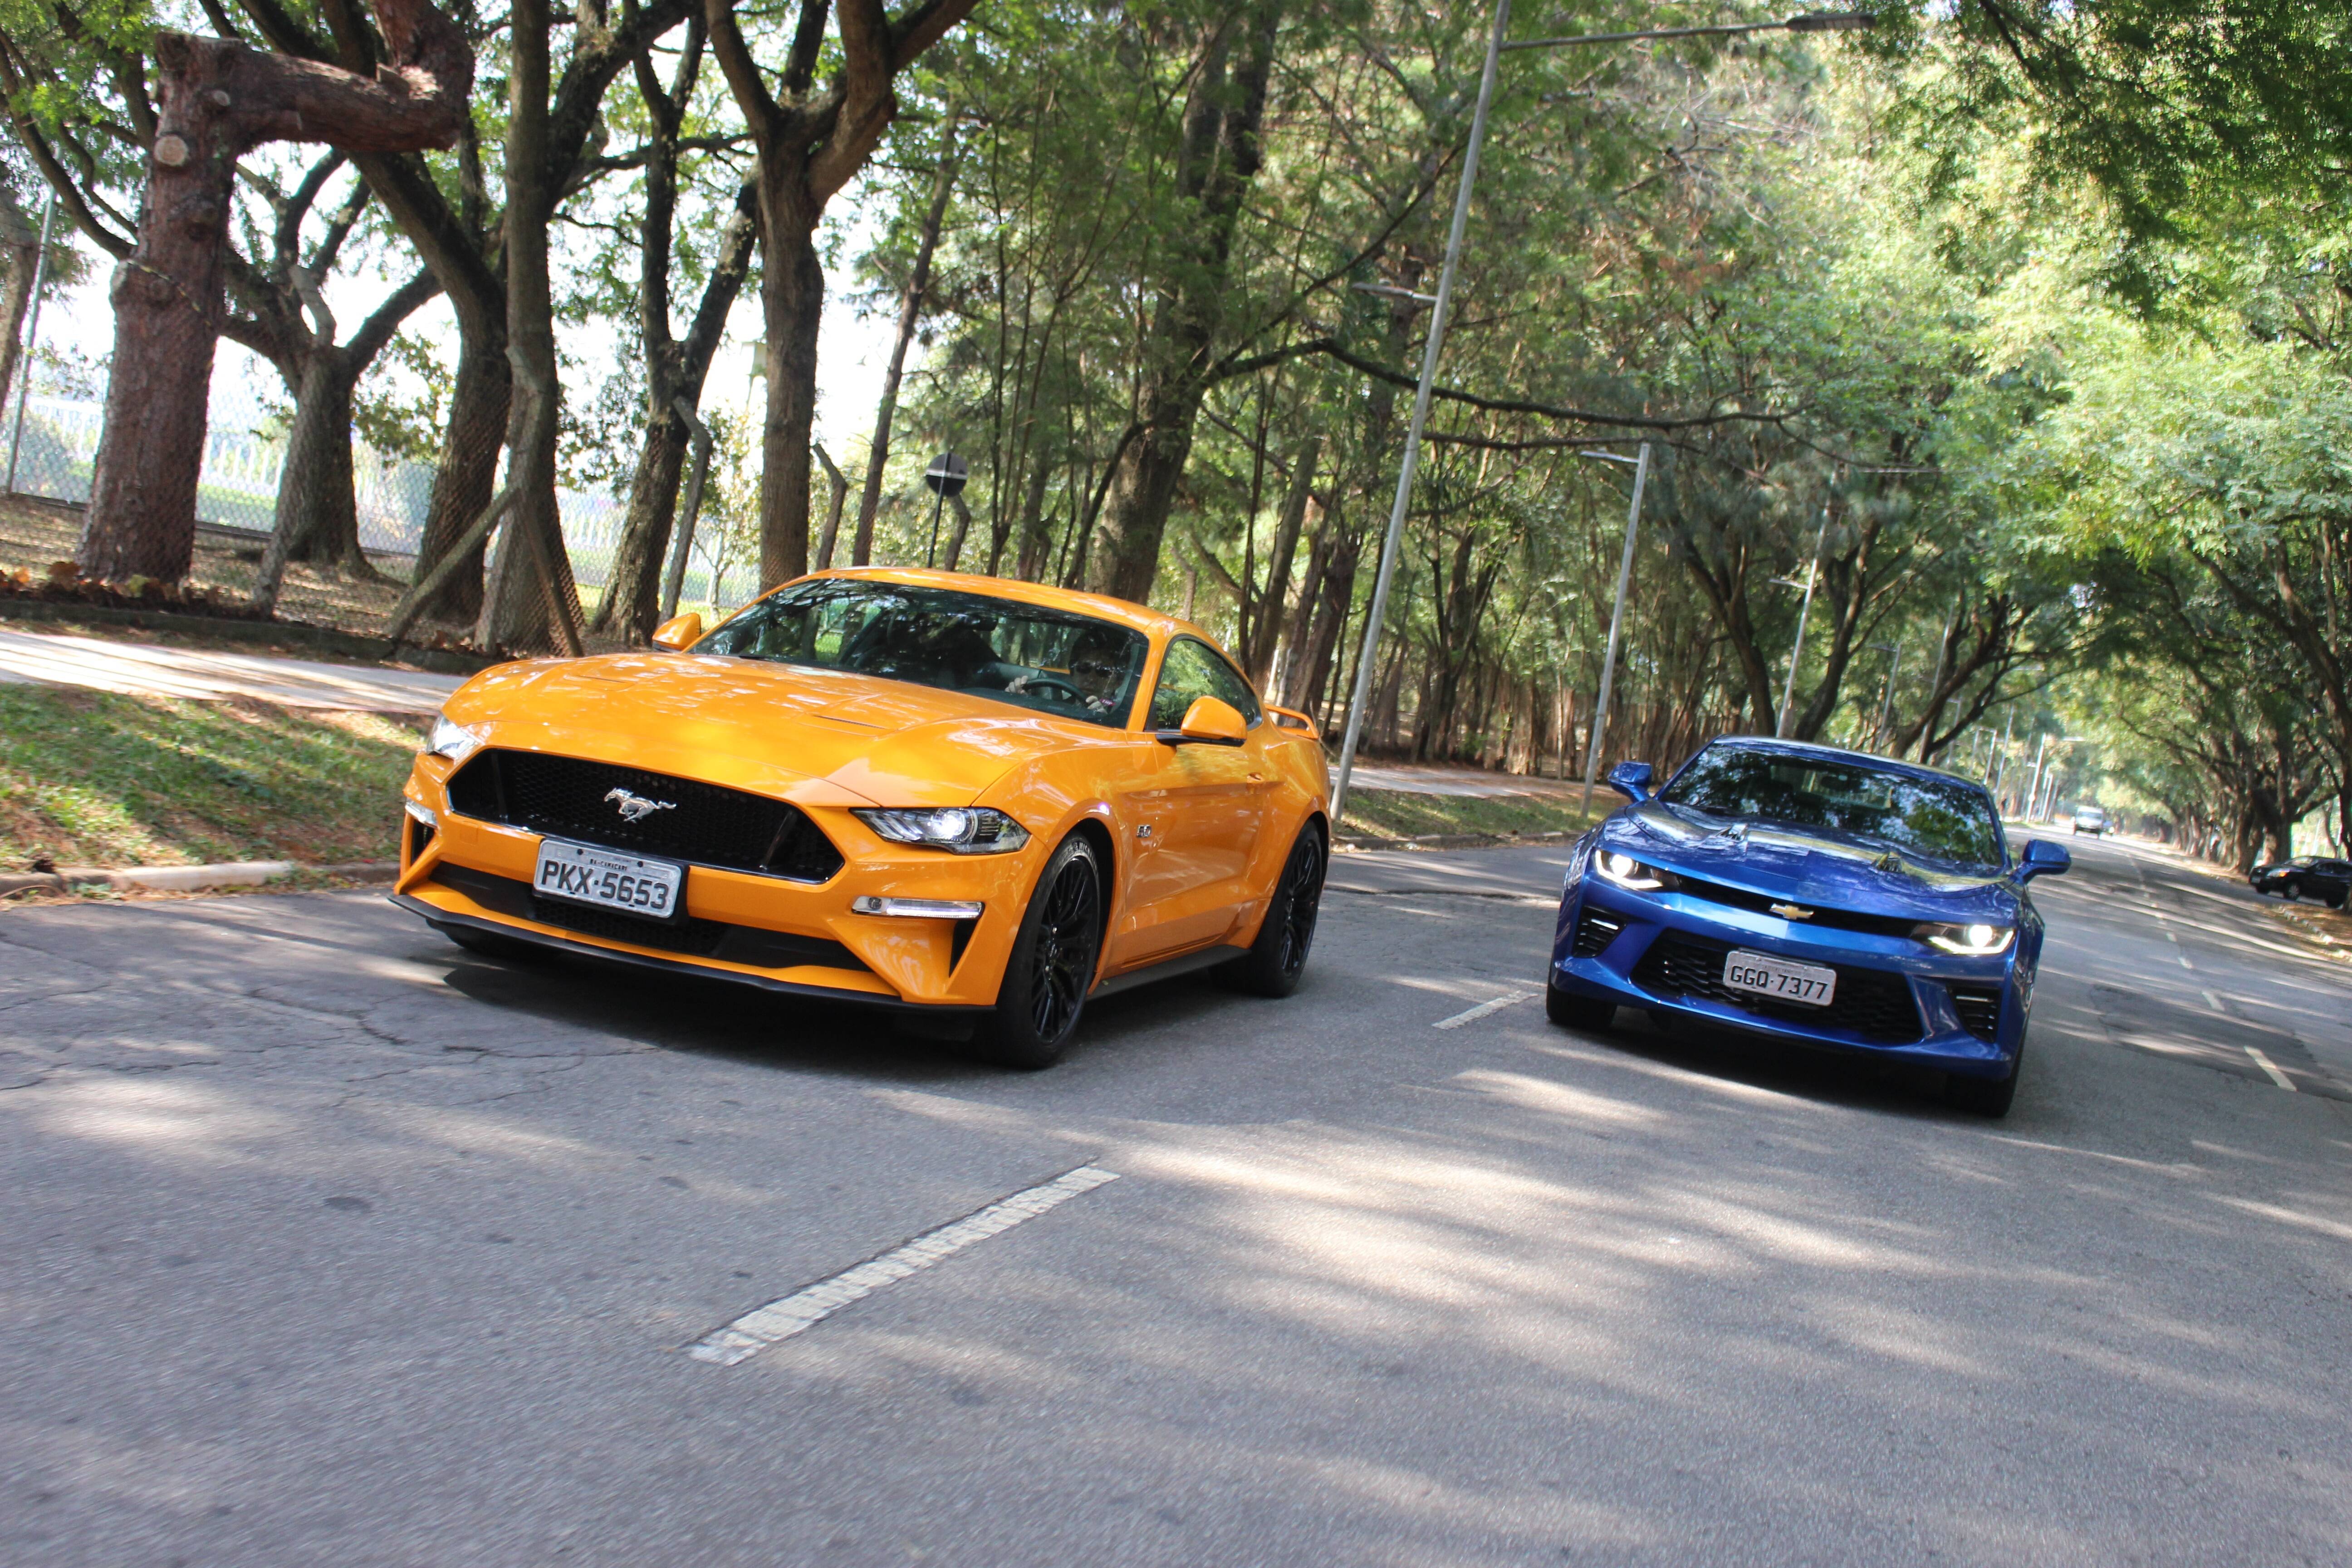 Chevrolet Camaro e Ford Mustang. Foto: Caue Lira/iG